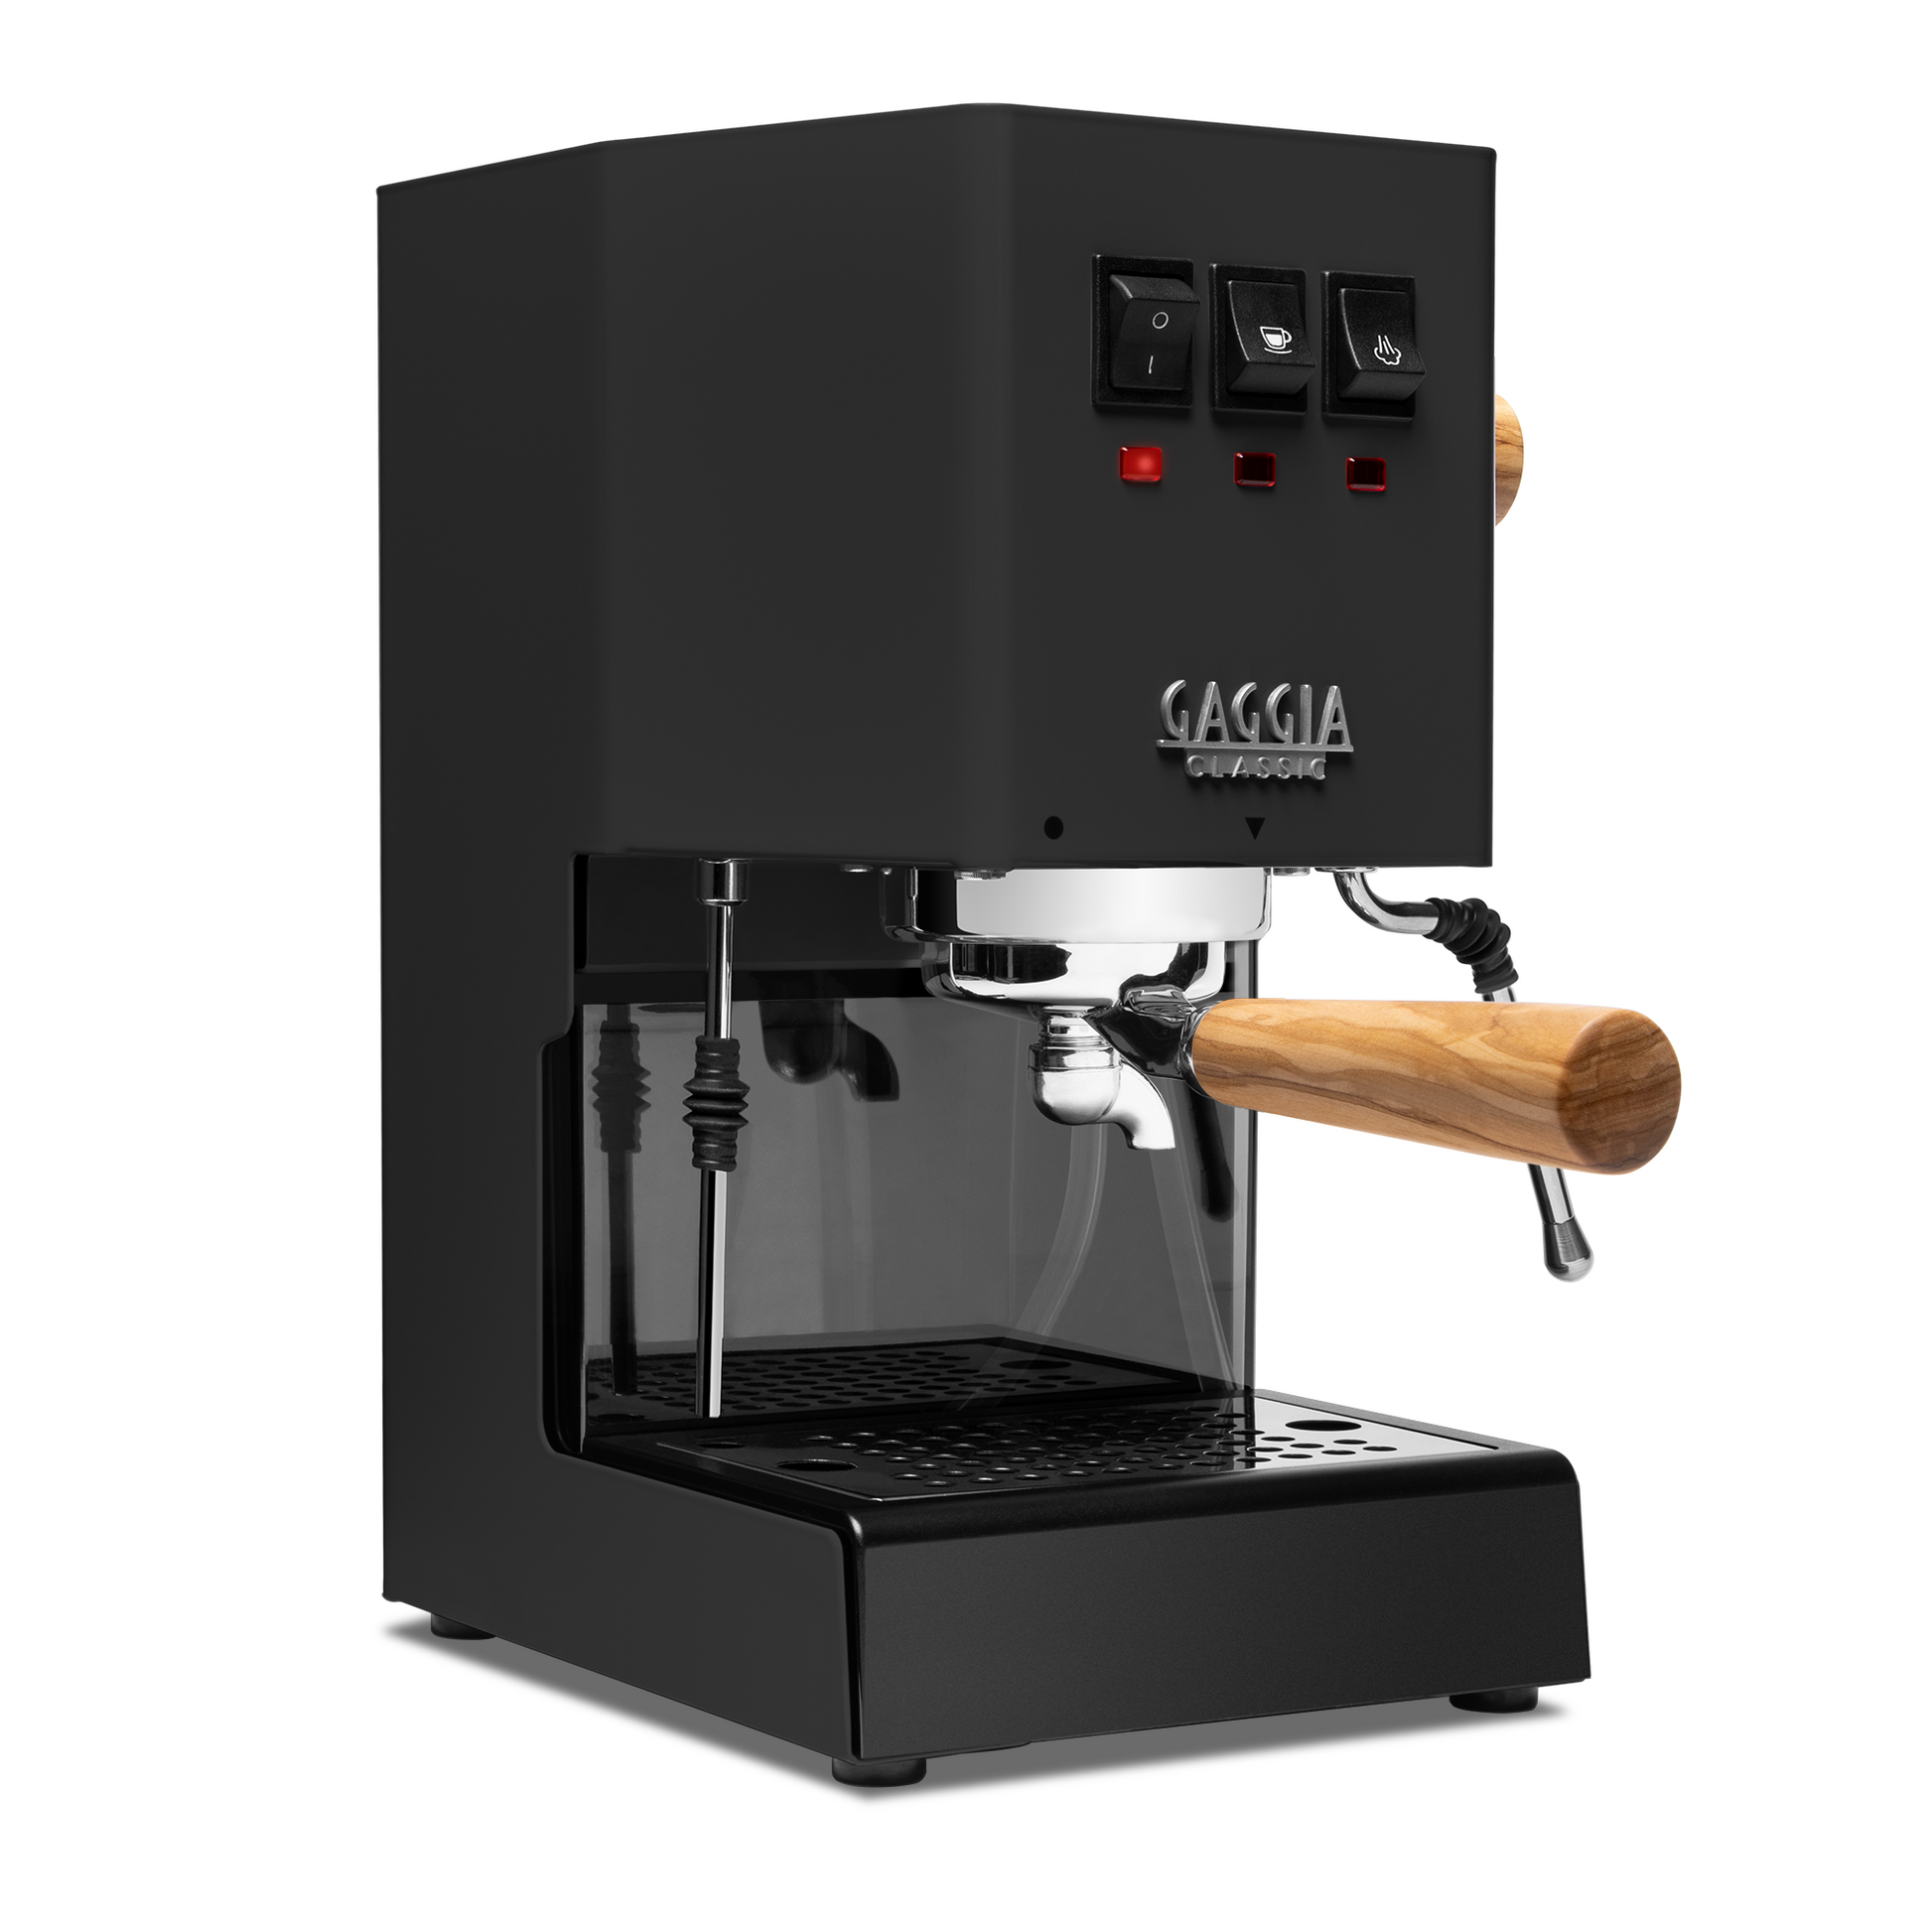 DeLonghi Dedica Coffee Grinder – Whole Latte Love